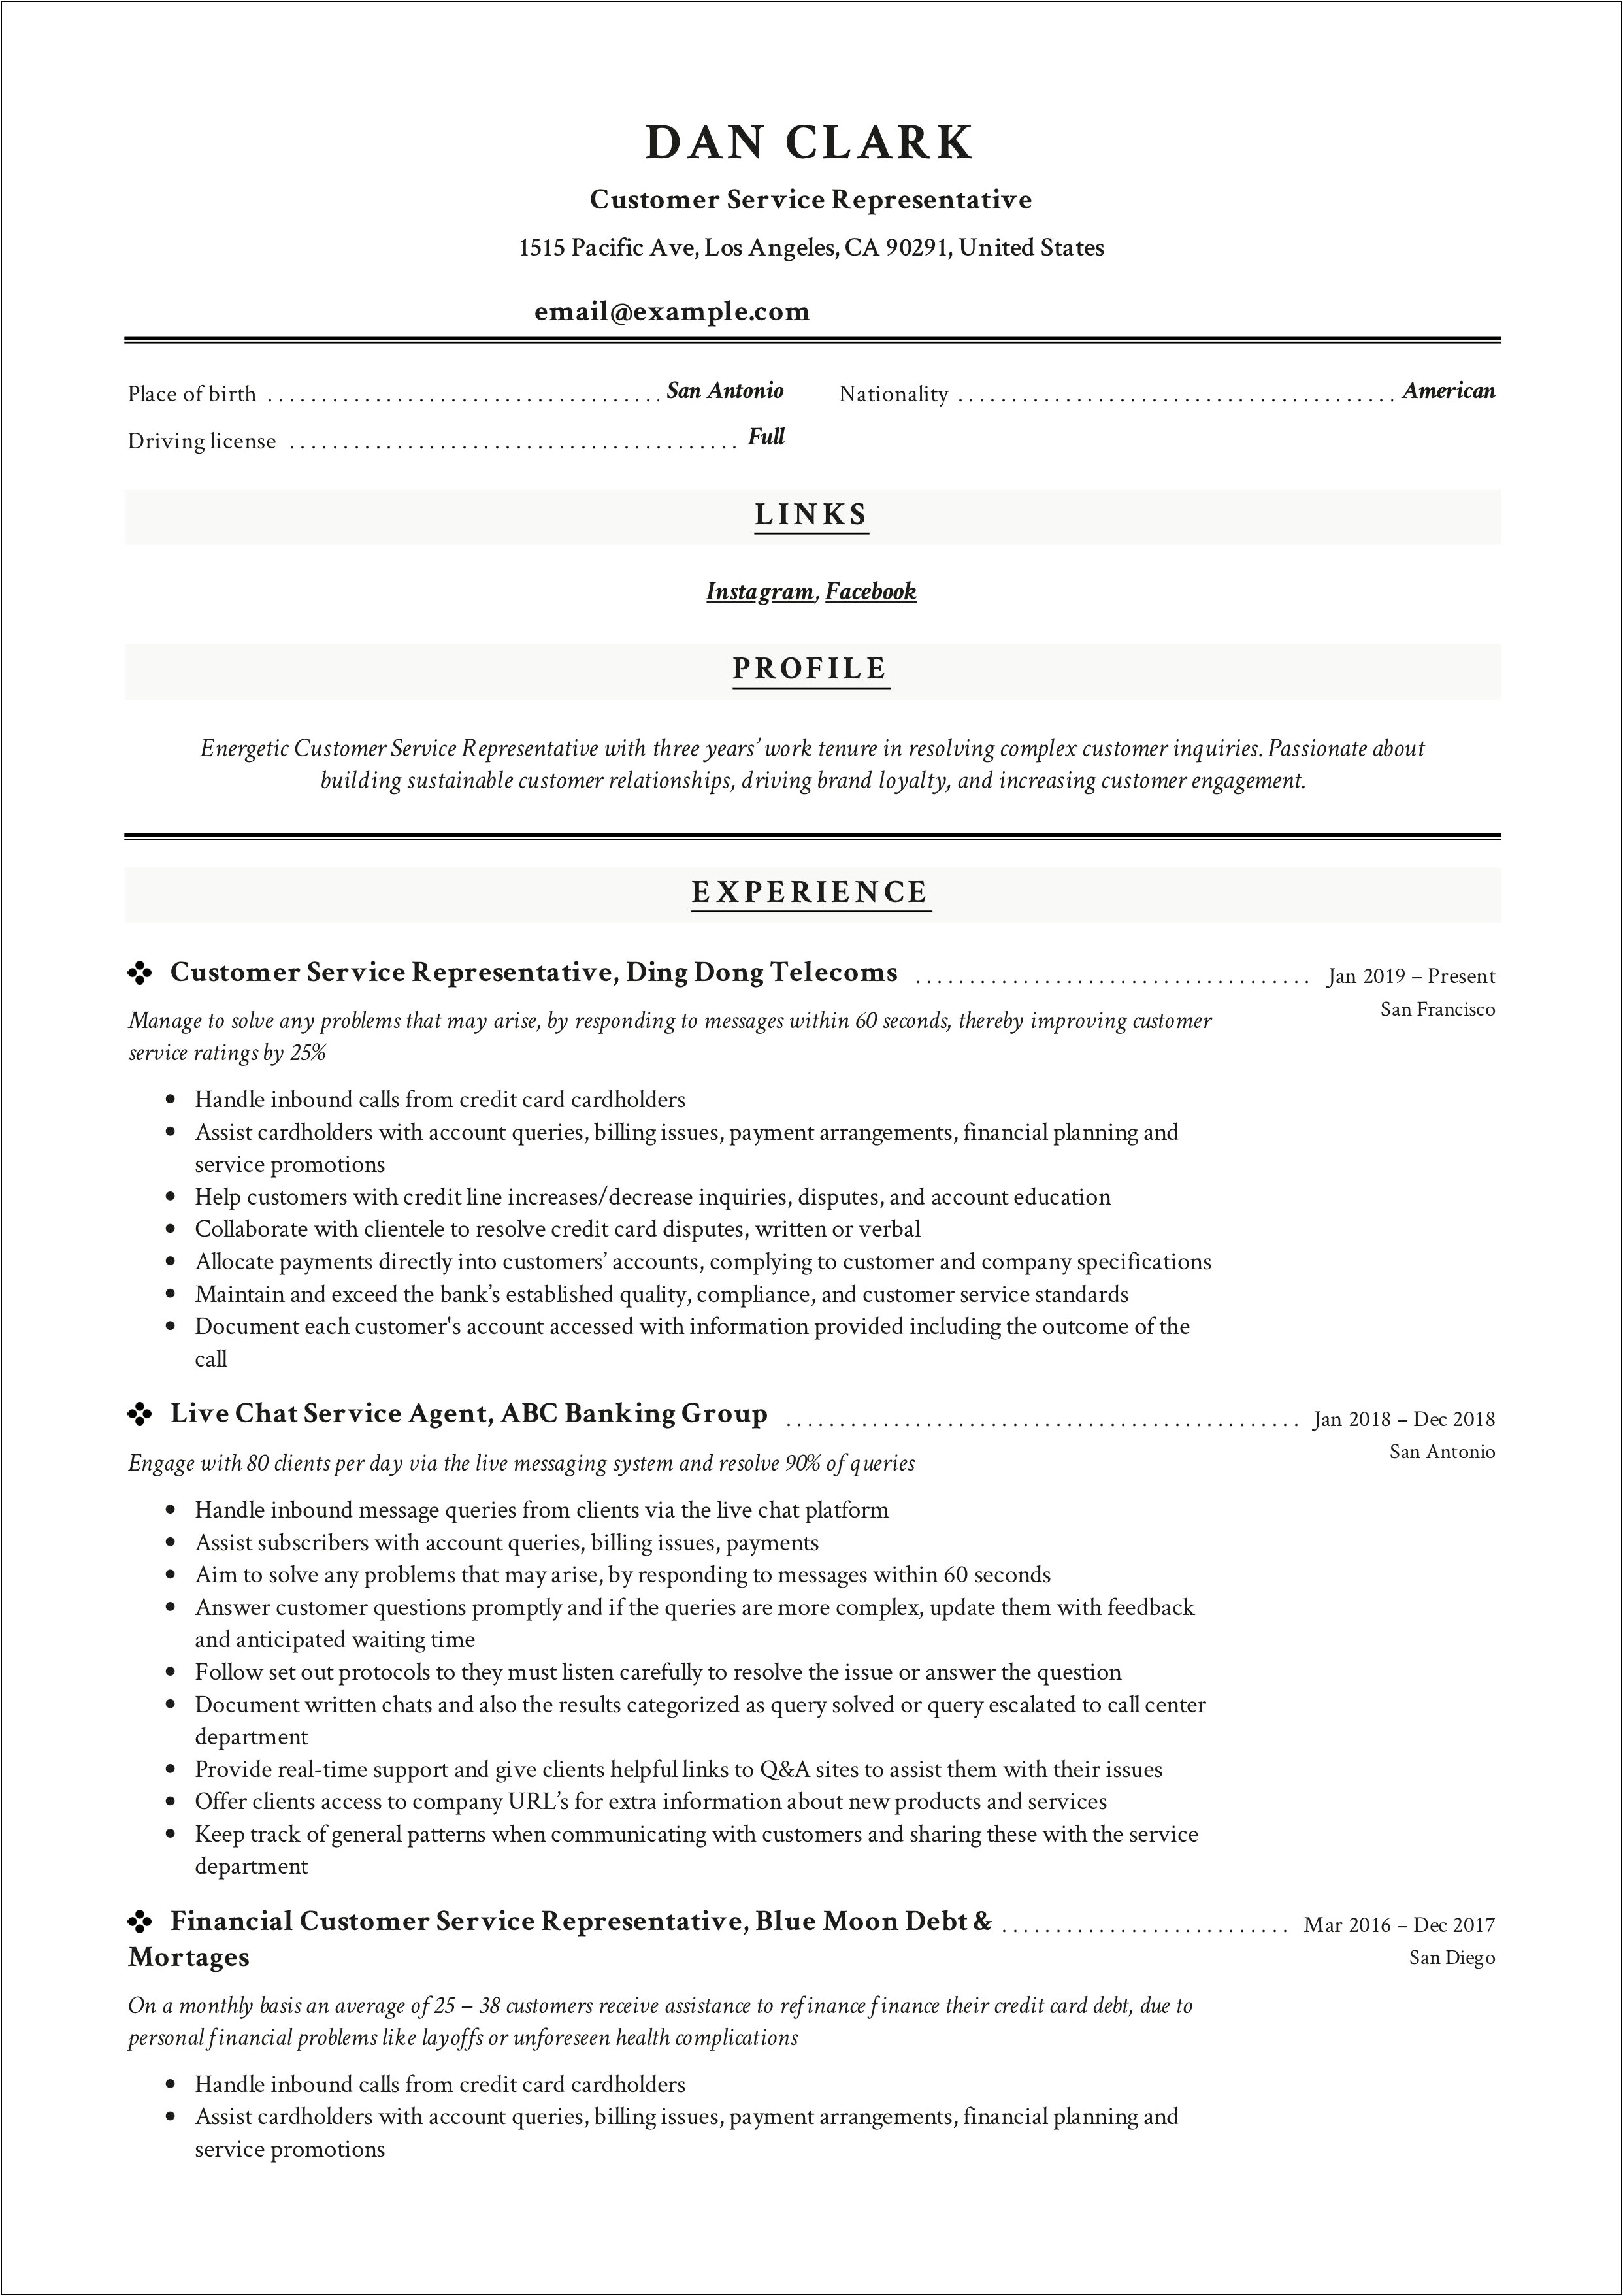 Resume Summary For Customer Service Specialist